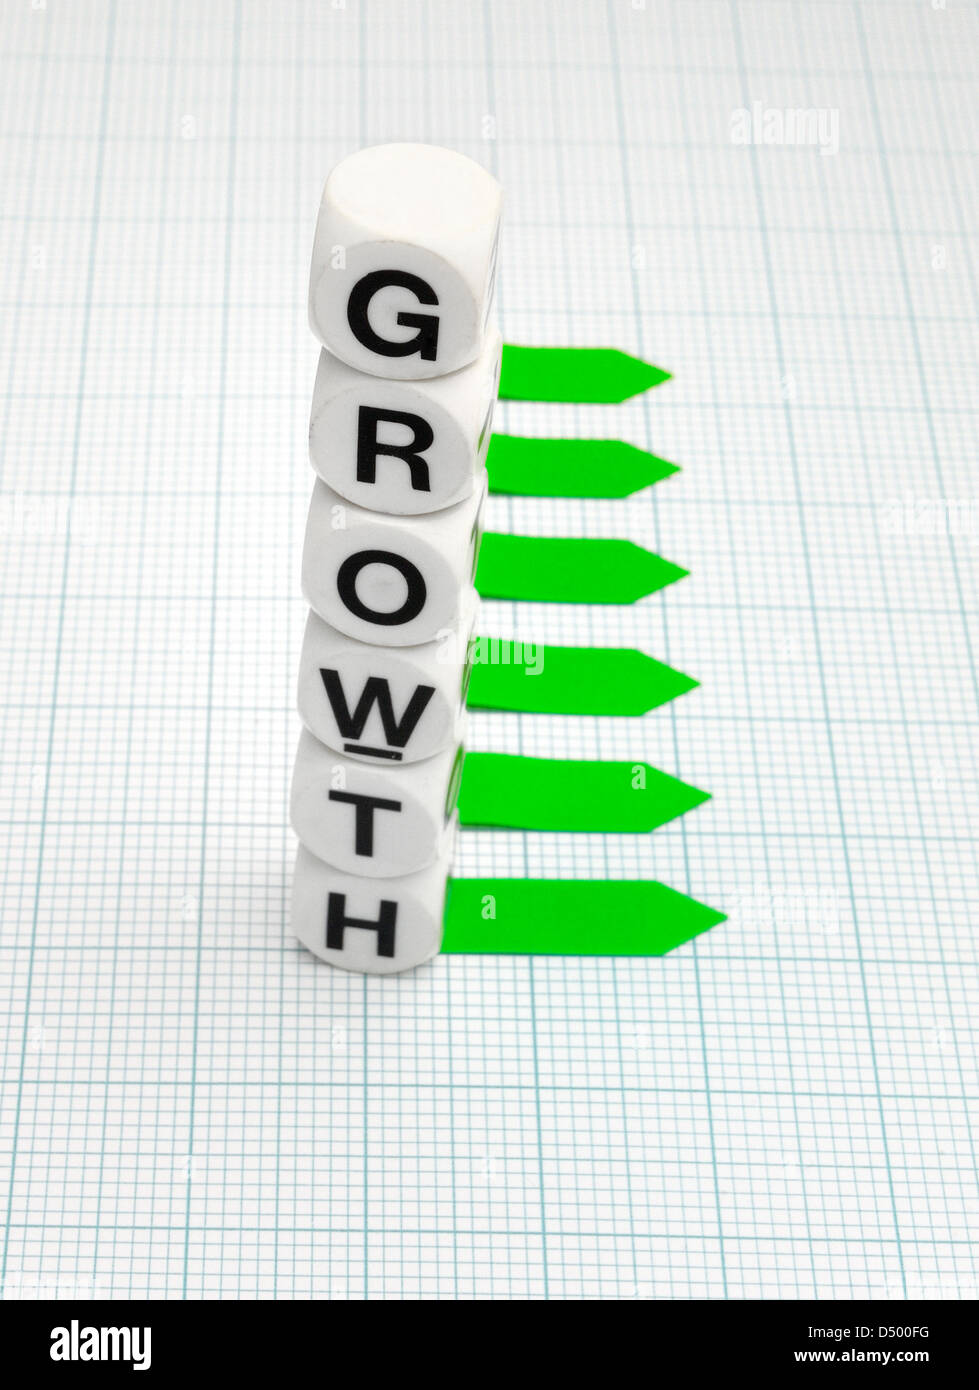 Growth Stock Photo